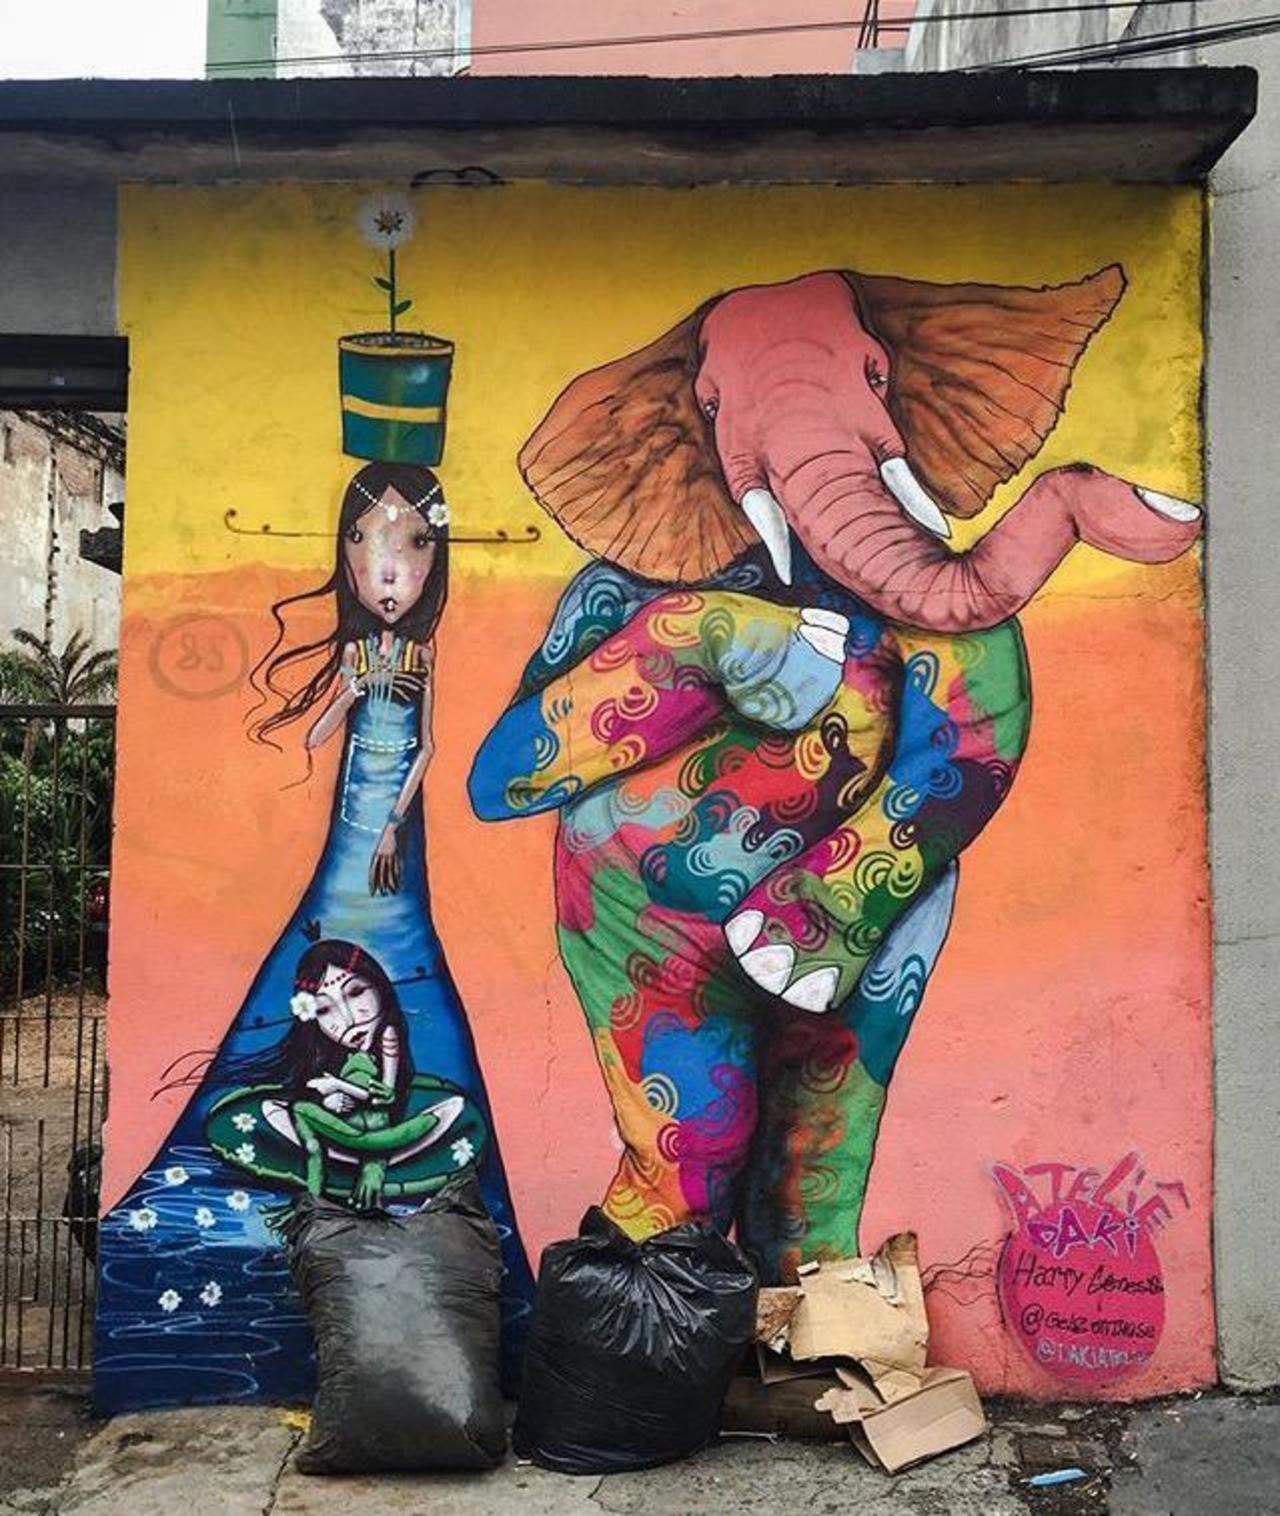 Street Art by Harry Geneis & Gelson in São Paulo #art #mural #graffiti #streetart http://t.co/SlLbhuMZfD … … …… … http://twitter.com/GoogleStreetArt/status/648016473831645184/photo/1/large?utm_source=fb&utm_medium=fb&utm_campaign=charlesjackso14&utm_content=648021533751906304